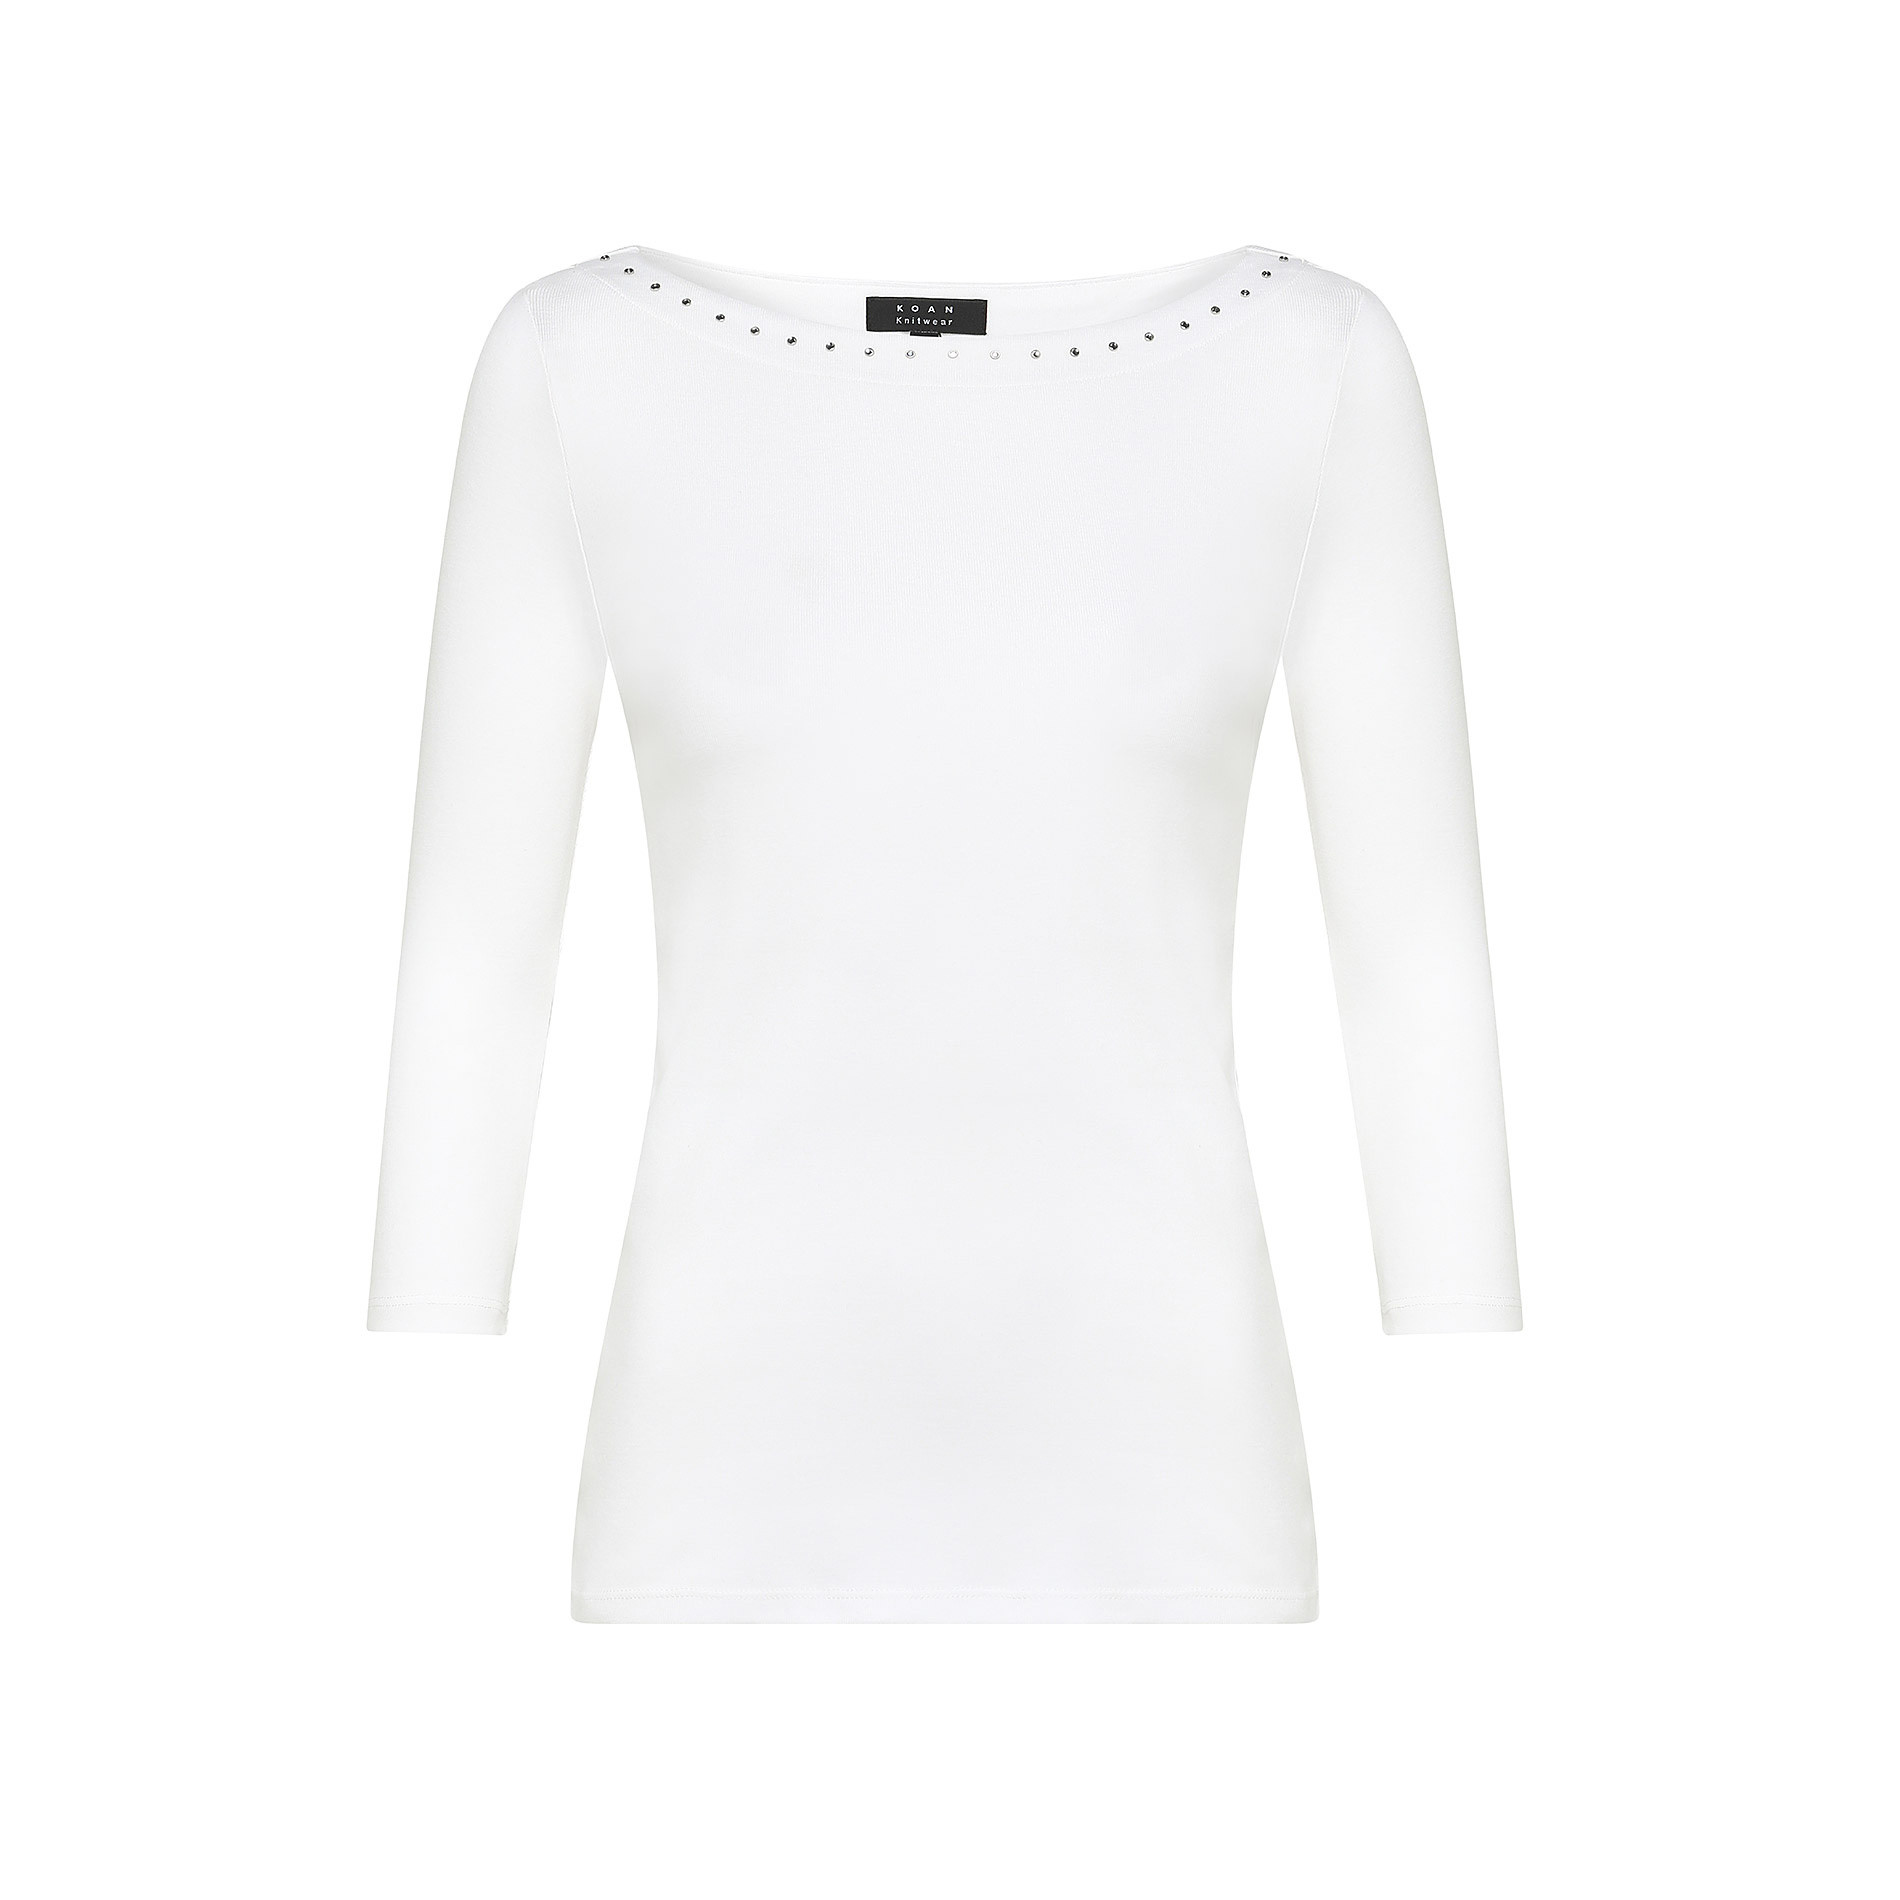 T-shirt puro cotone con borchiette Koan, Bianco, large image number 0